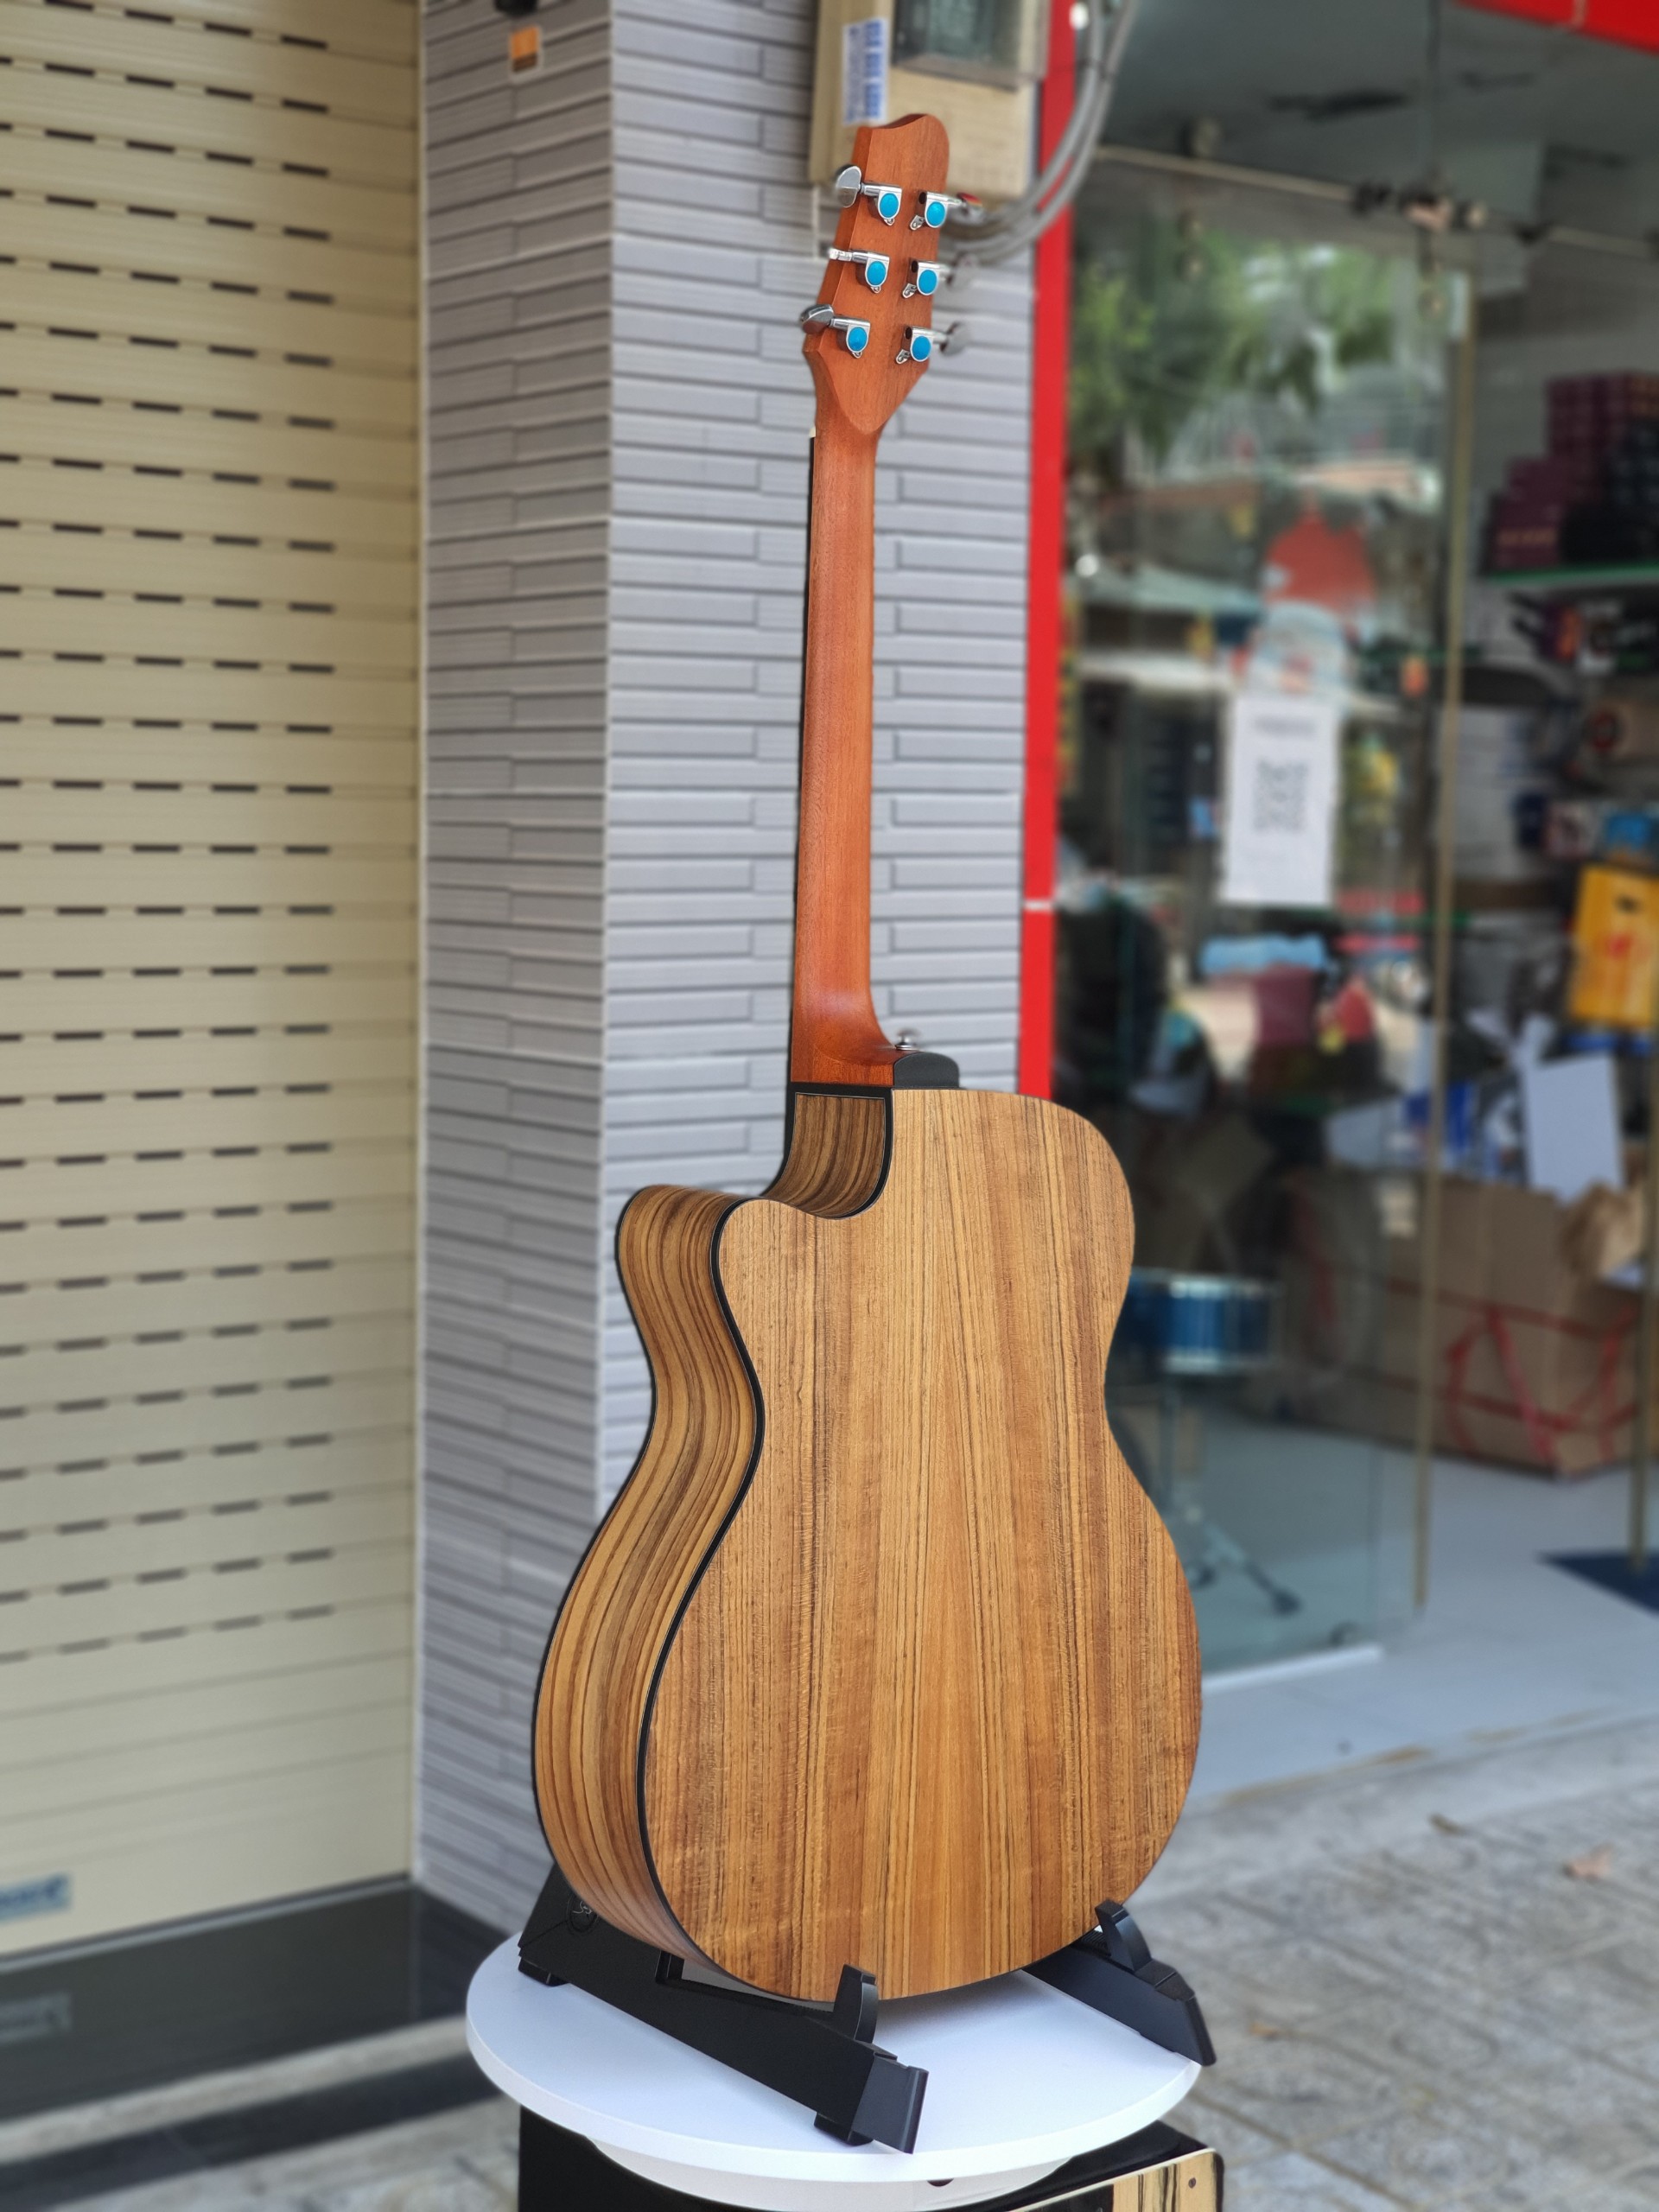 Đàn guitar acoustic Smiger SM-403 gỗ walnut